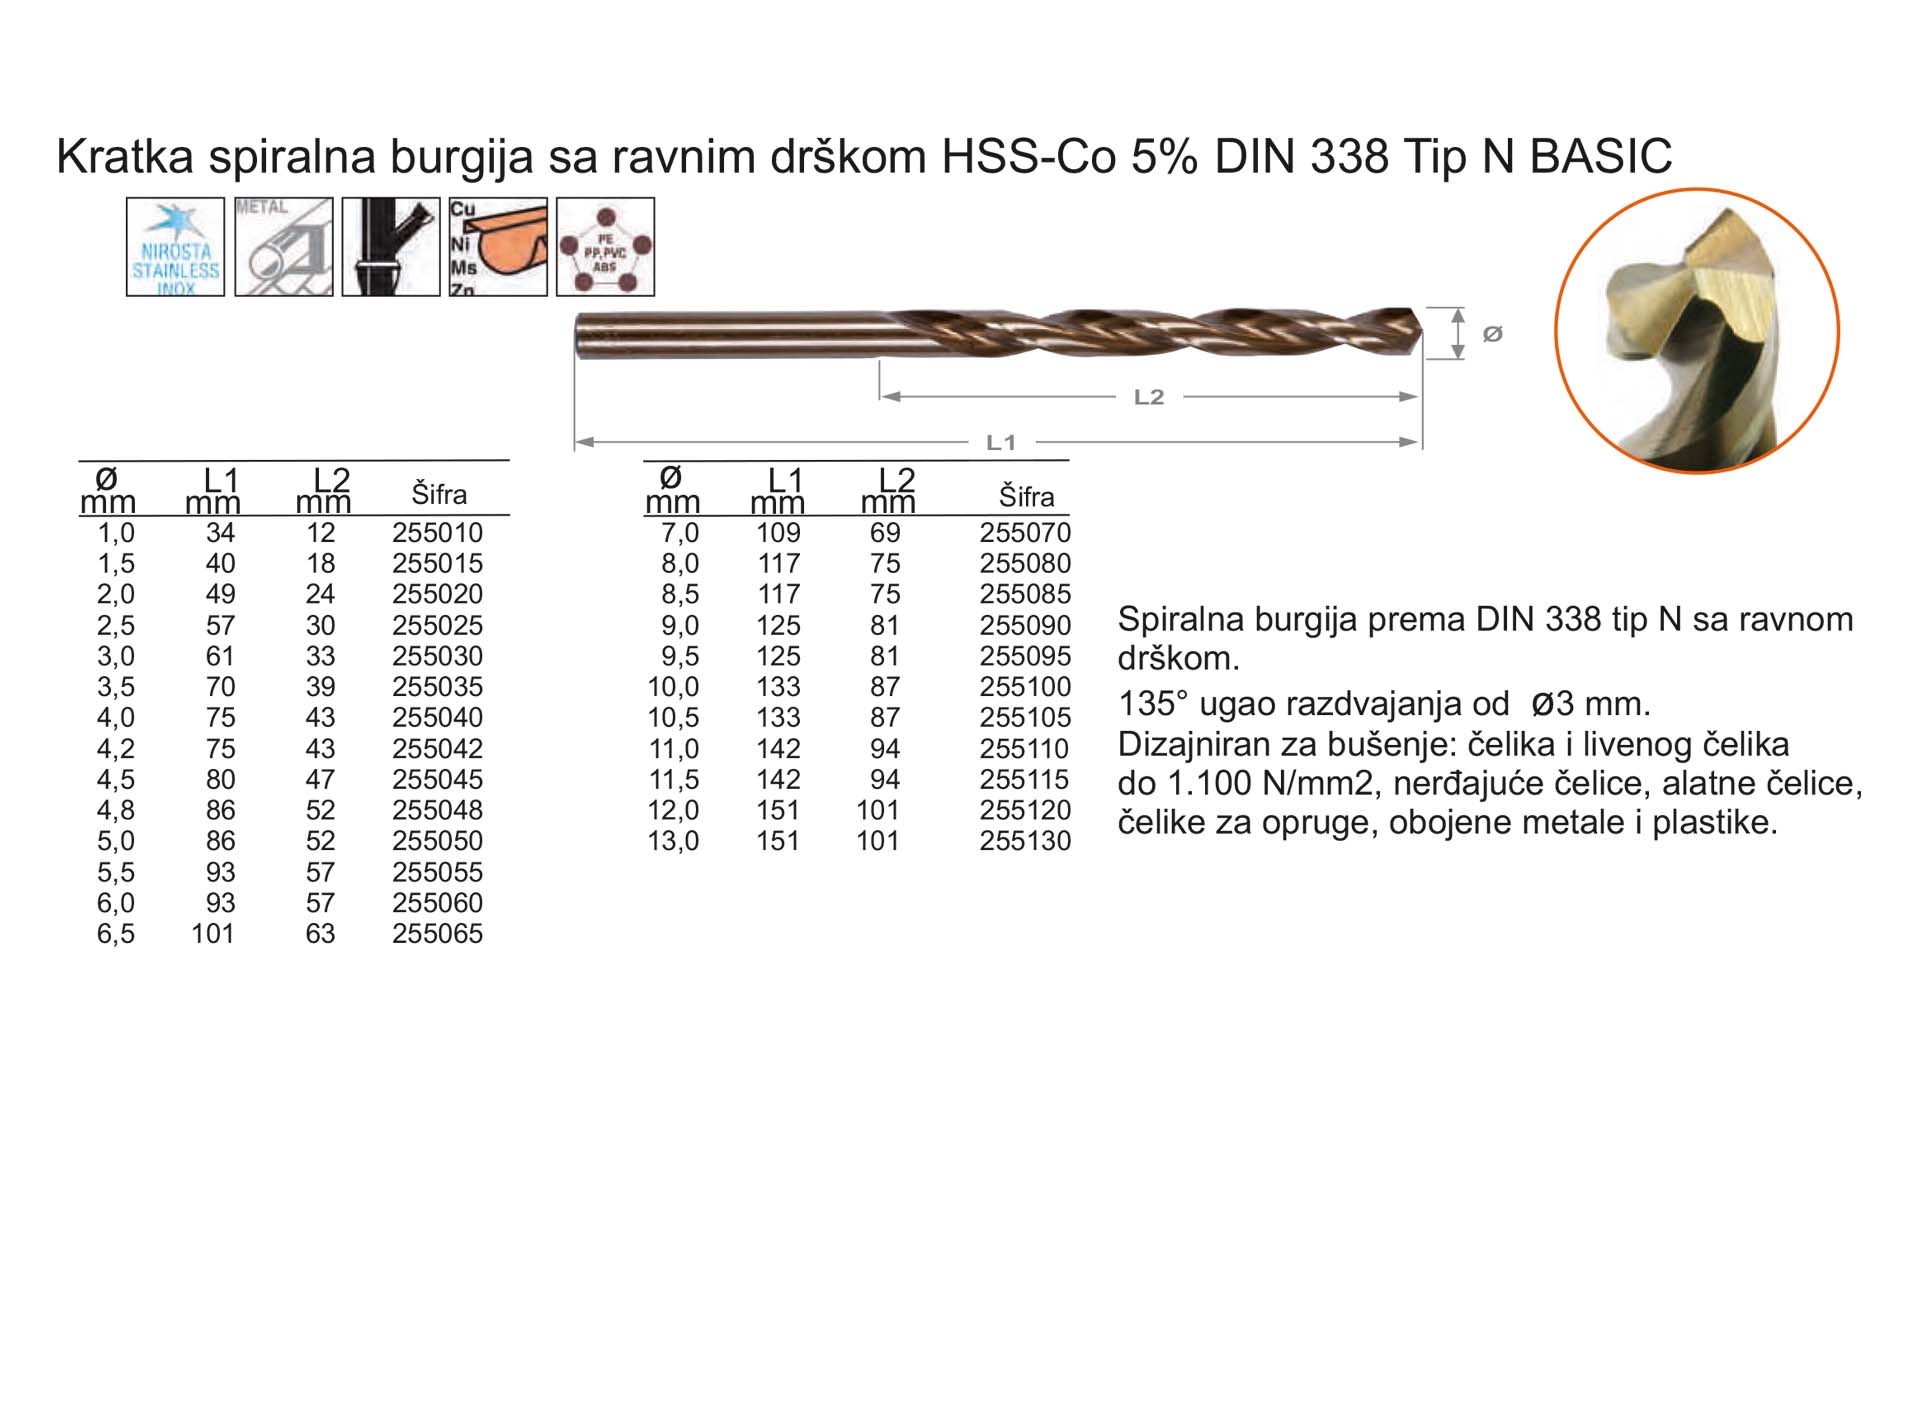 Kratka spiralna burgija sa ravnim drškom HSS-Co 5% DIN 338 Tip N BASIC